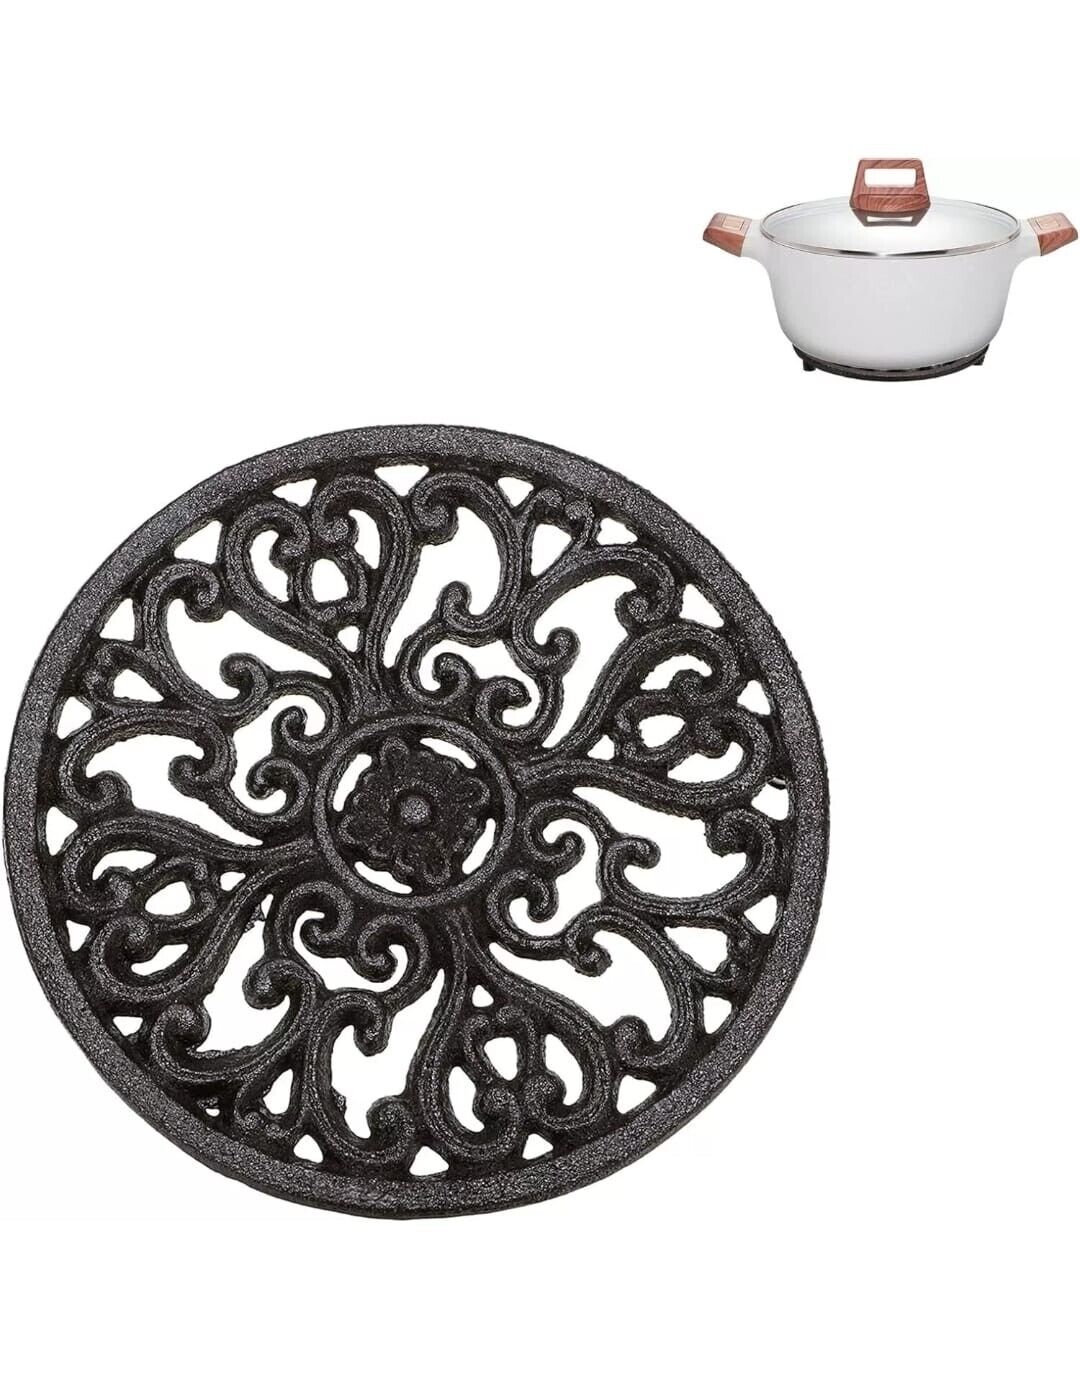 Metal Cast Iron Decorative Round Circular Kitchen Trivet Measure decor 6.7 Inch